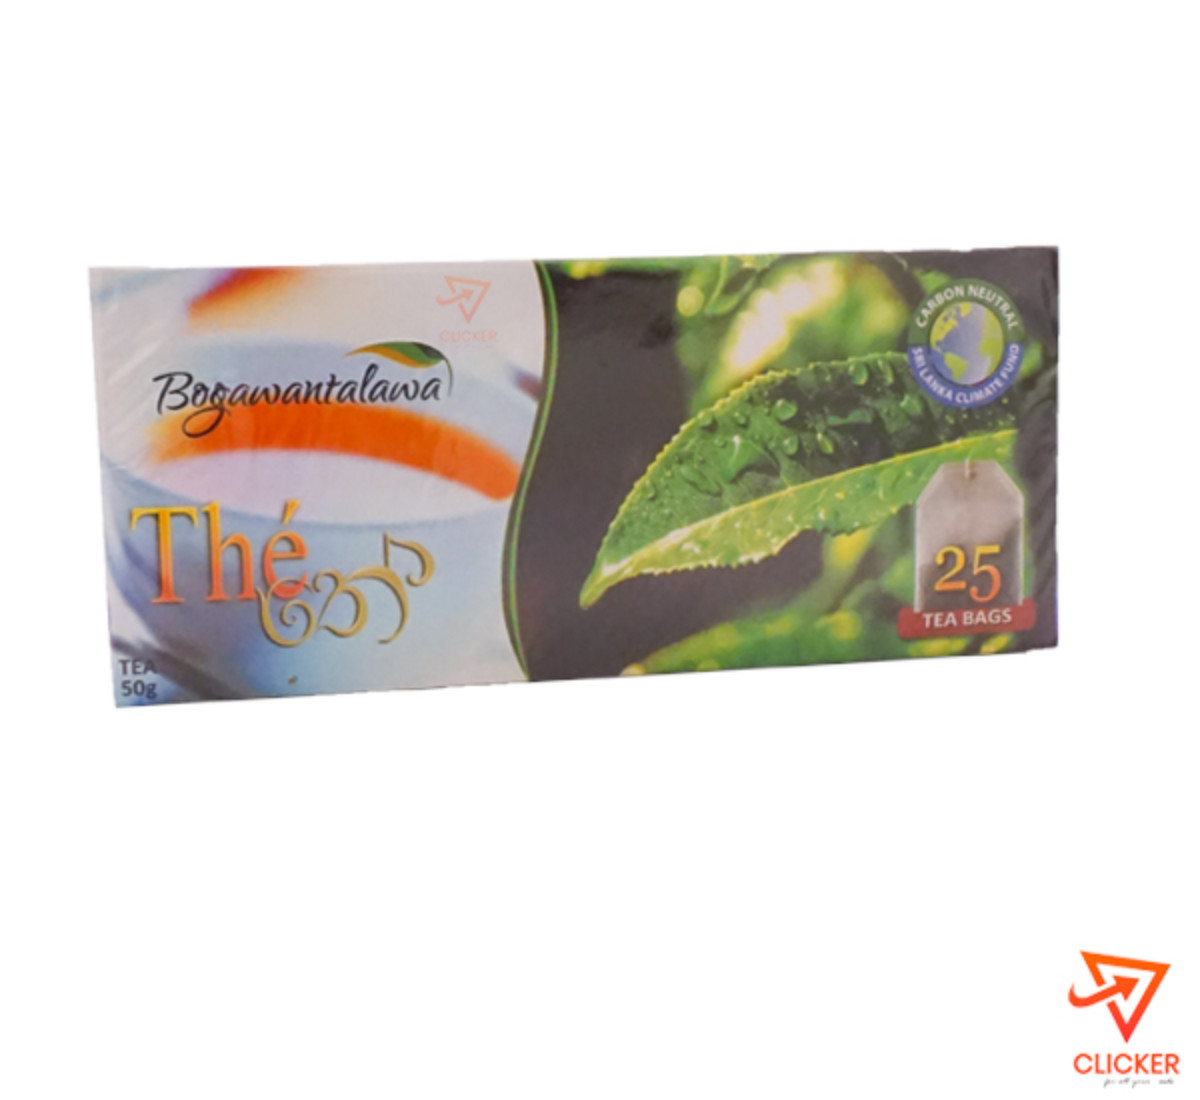 Clicker product 50g BOGAWANTALAWA tea (25 tea bags) 916